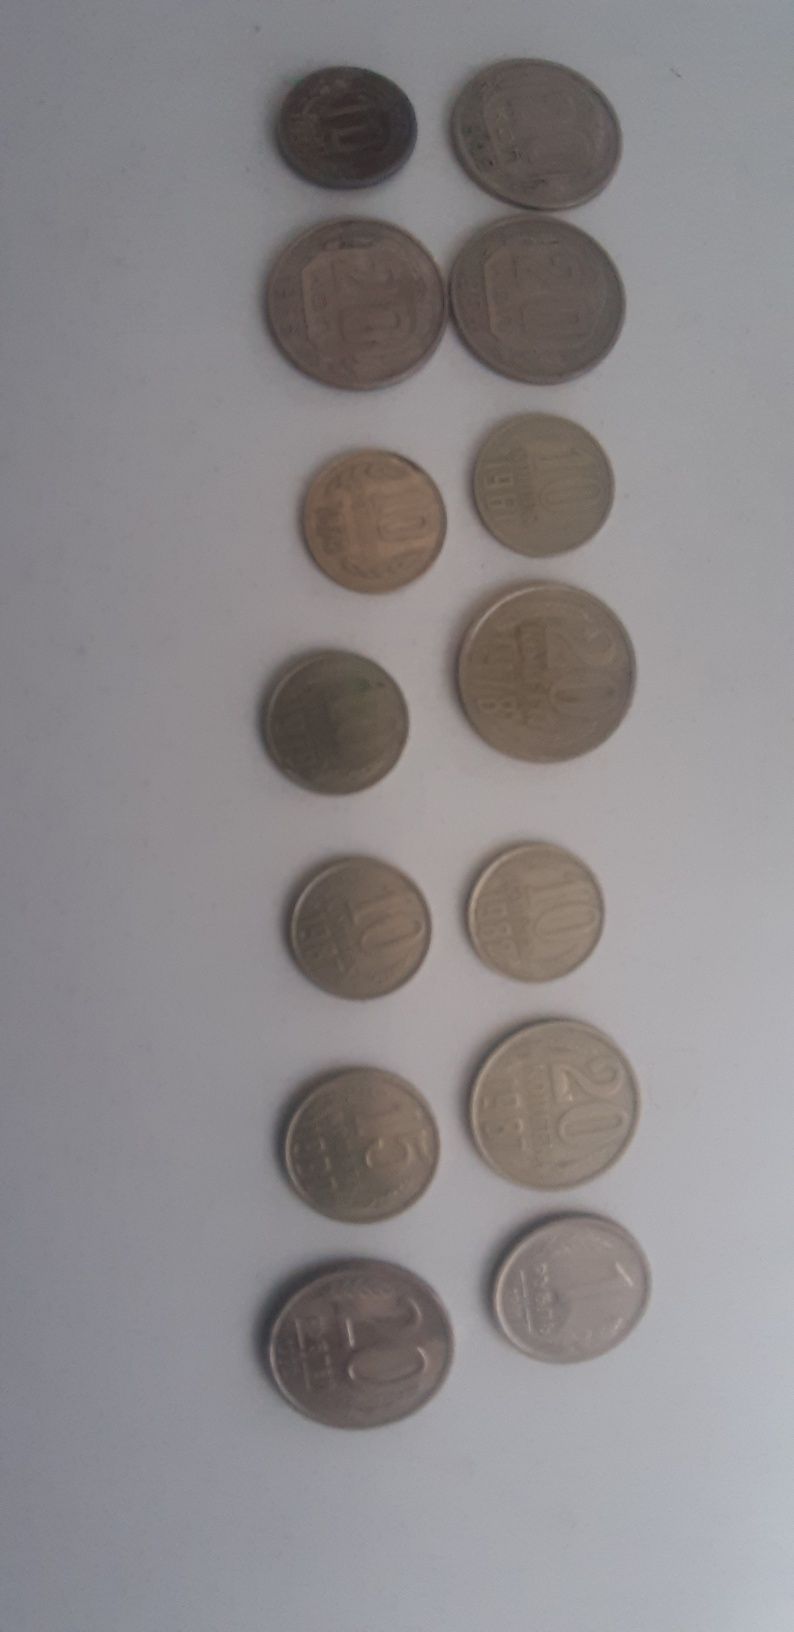 Rosyjskie monety kolekcjonerskie